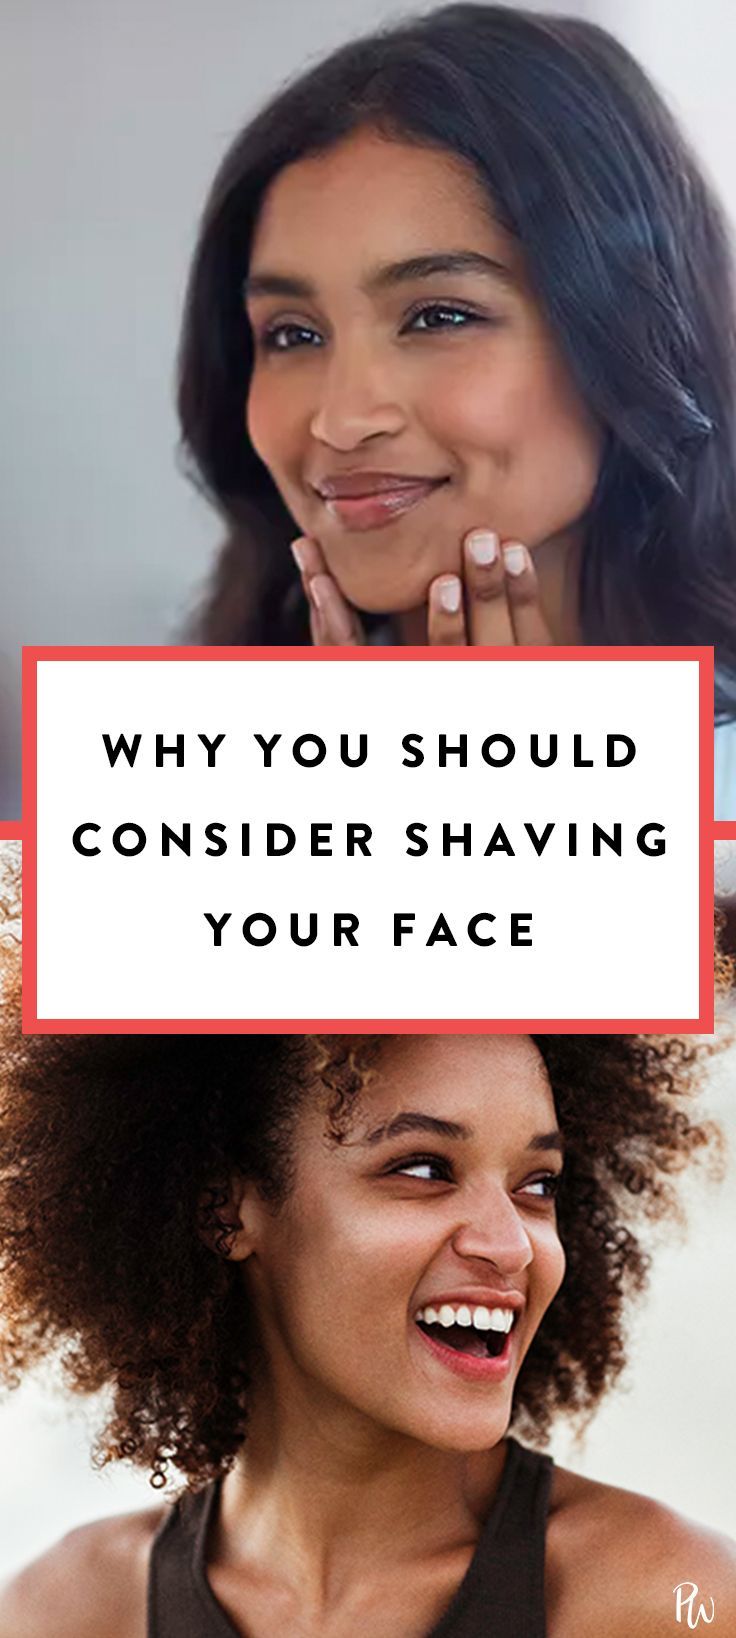 17 skincare beauty Secrets ideas